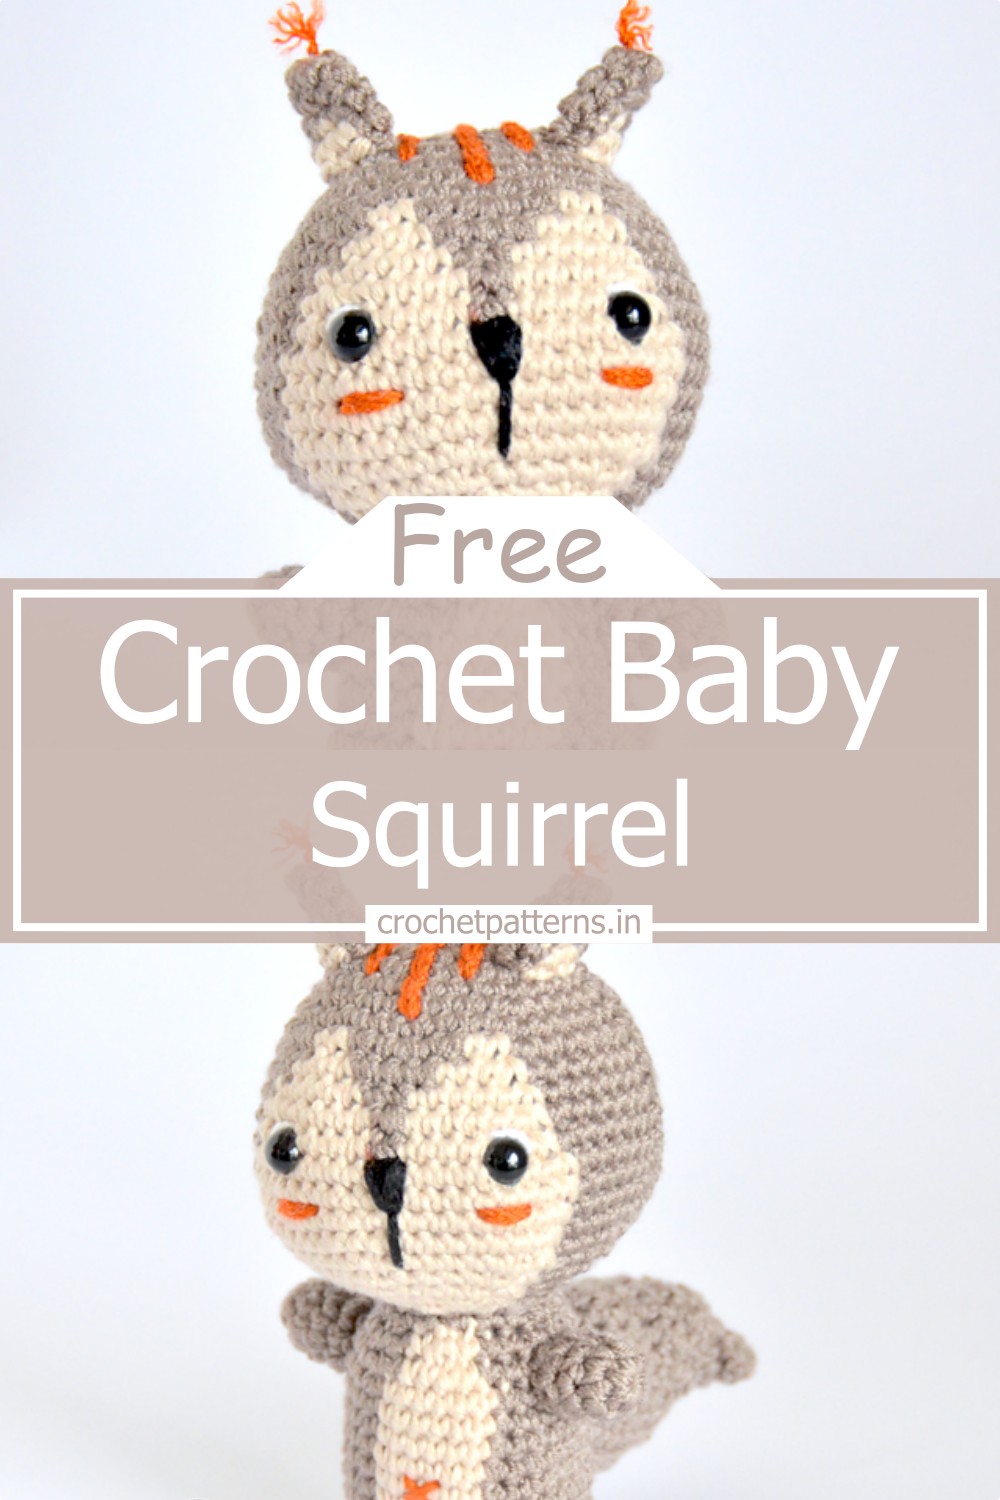 Crochet Baby Squirrel